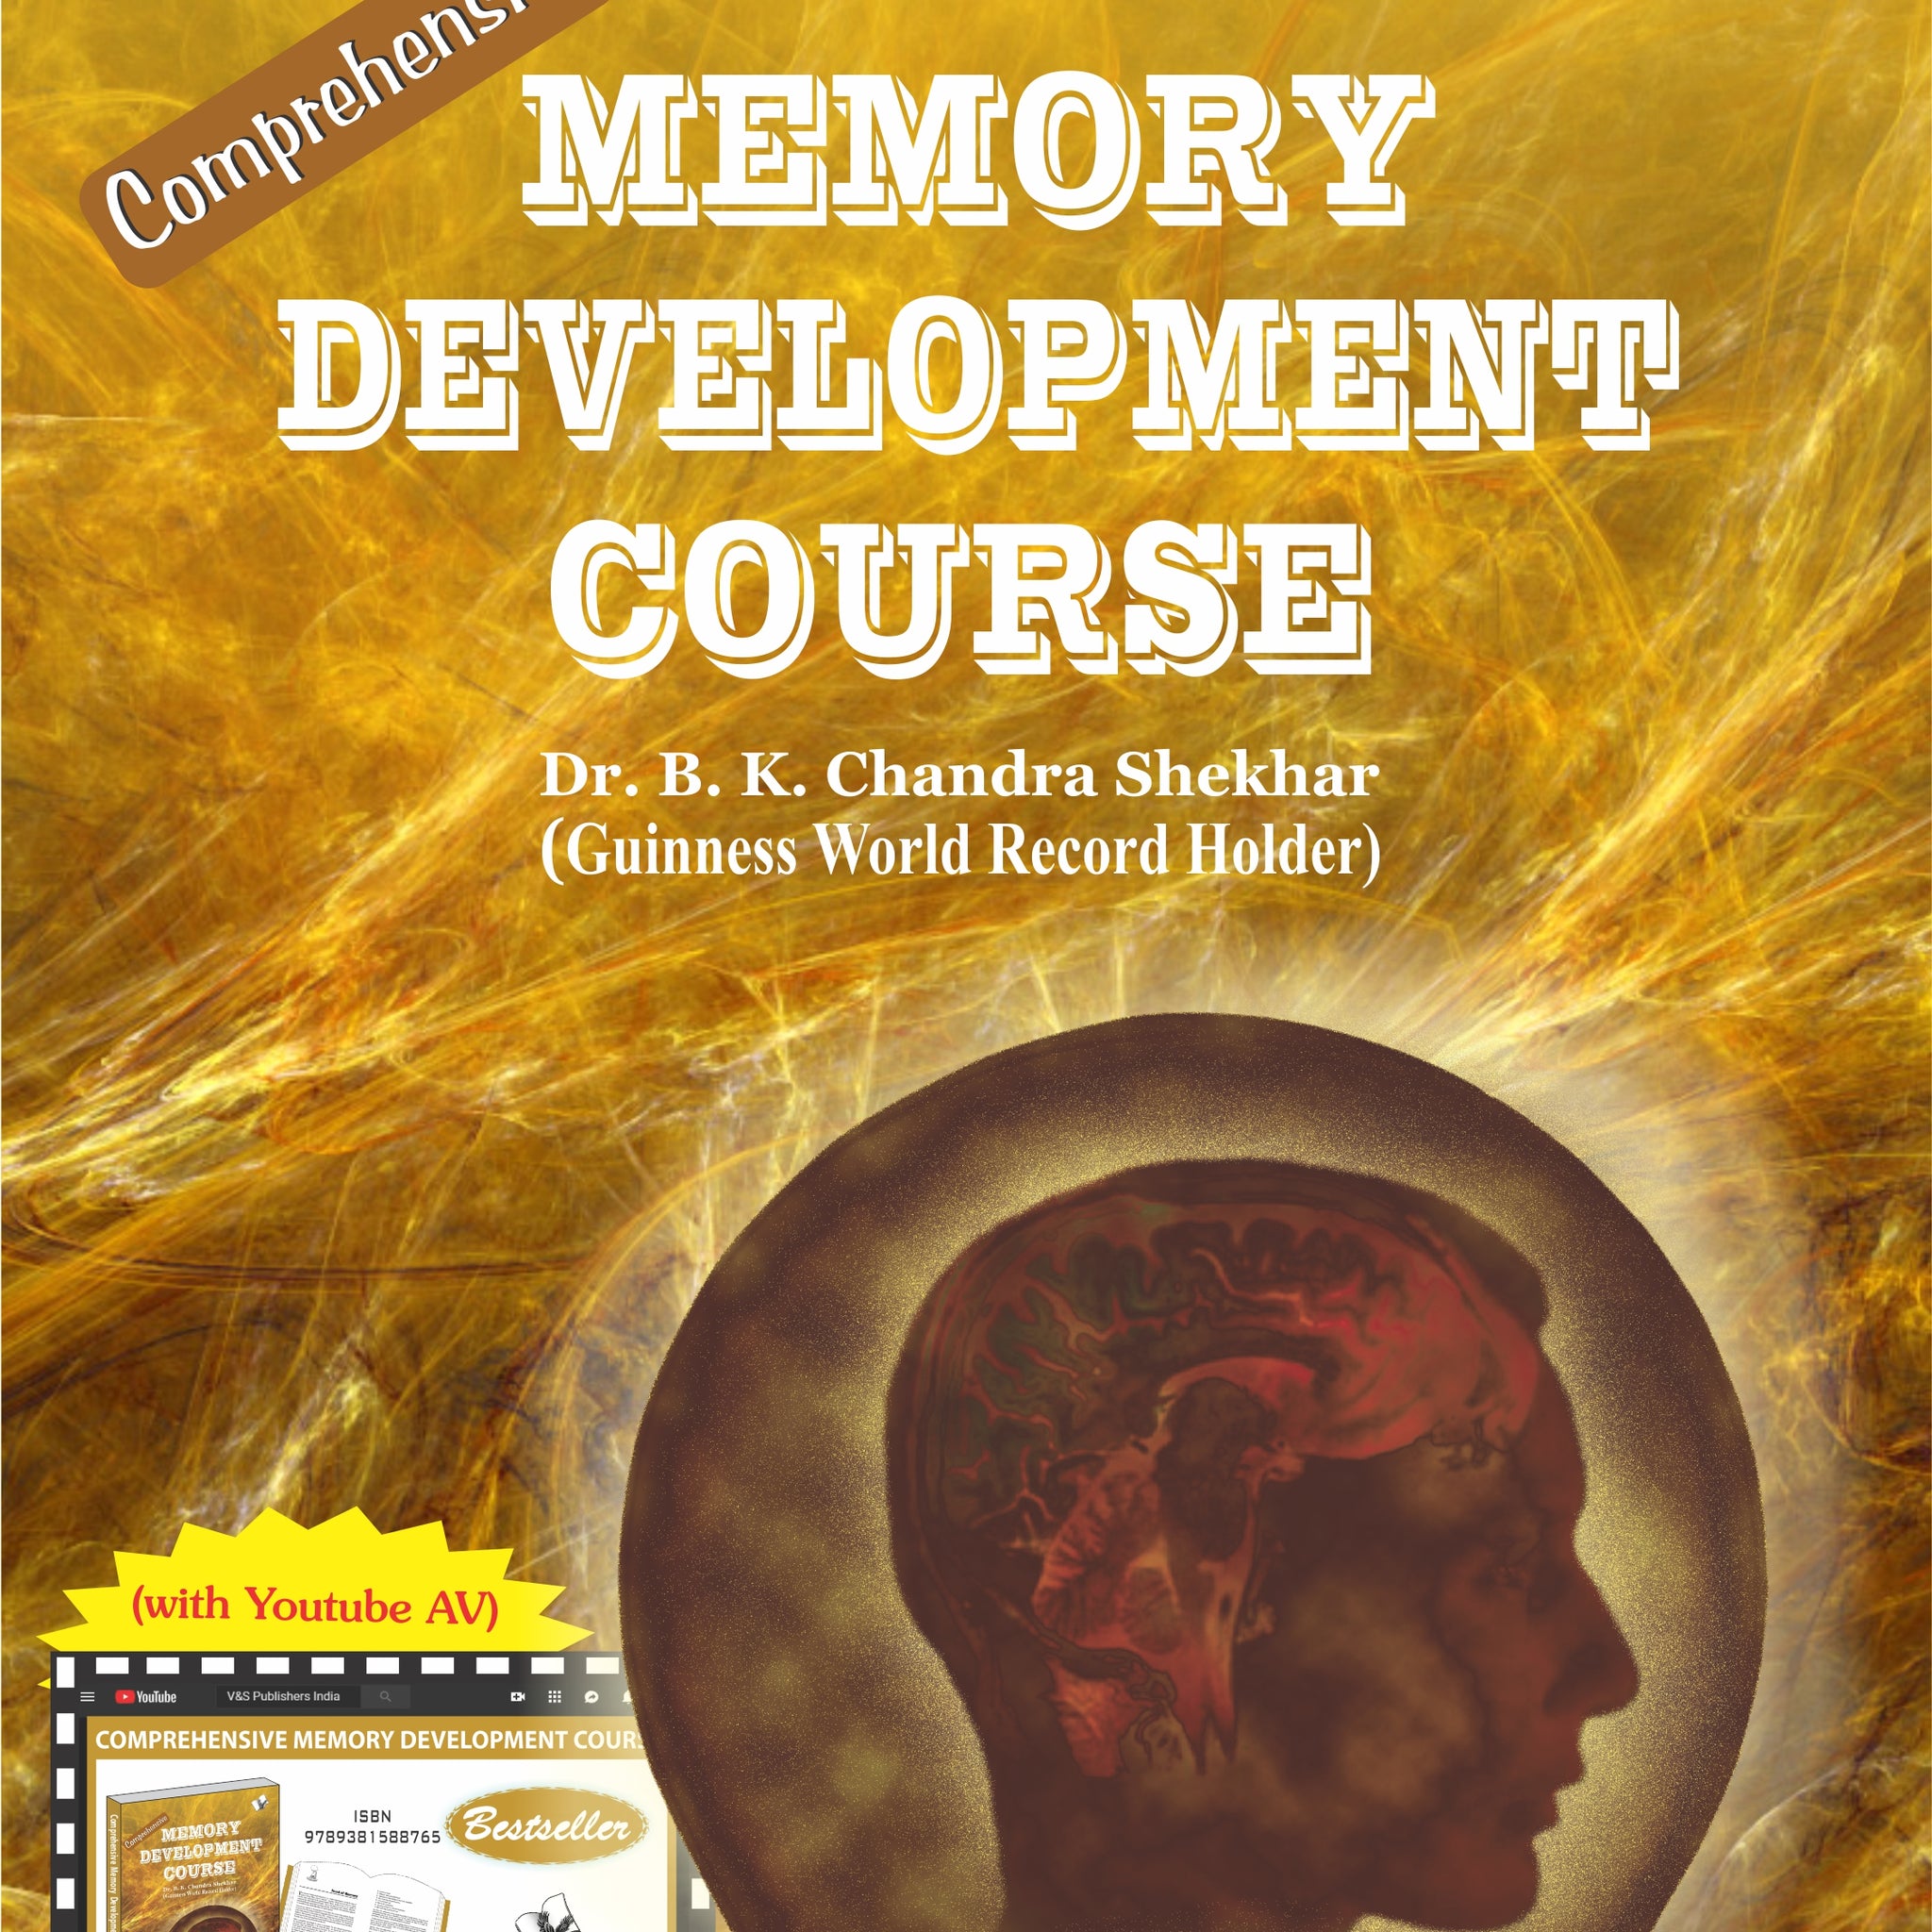 Comprehensive Memory Development Course (With Youtube AV)